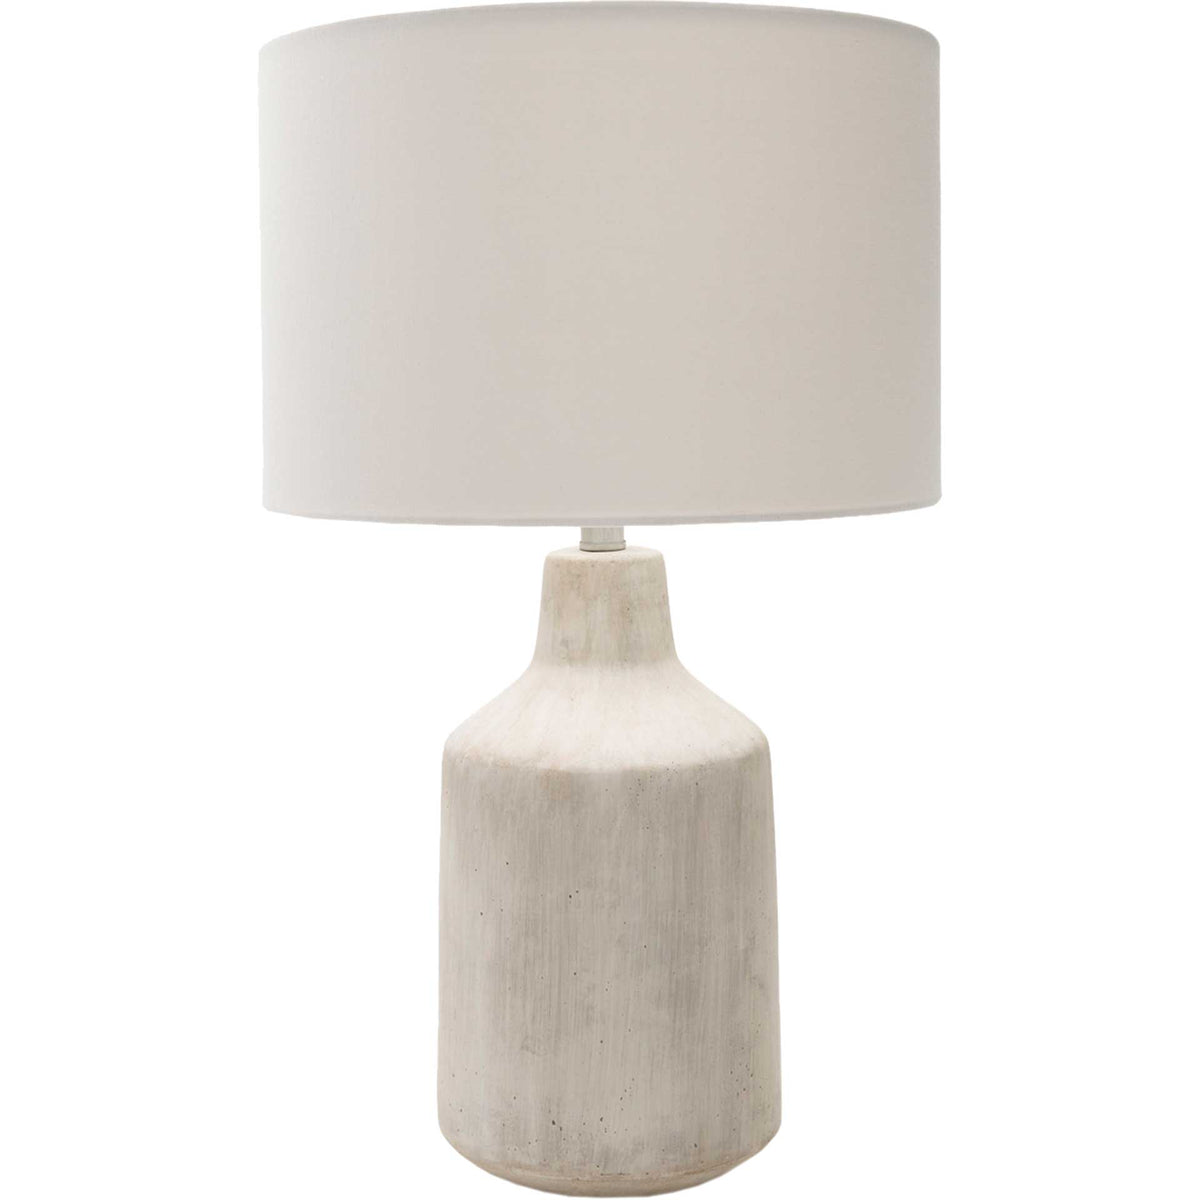 Forrest Table Lamp Ivory/Light Gray/Beige